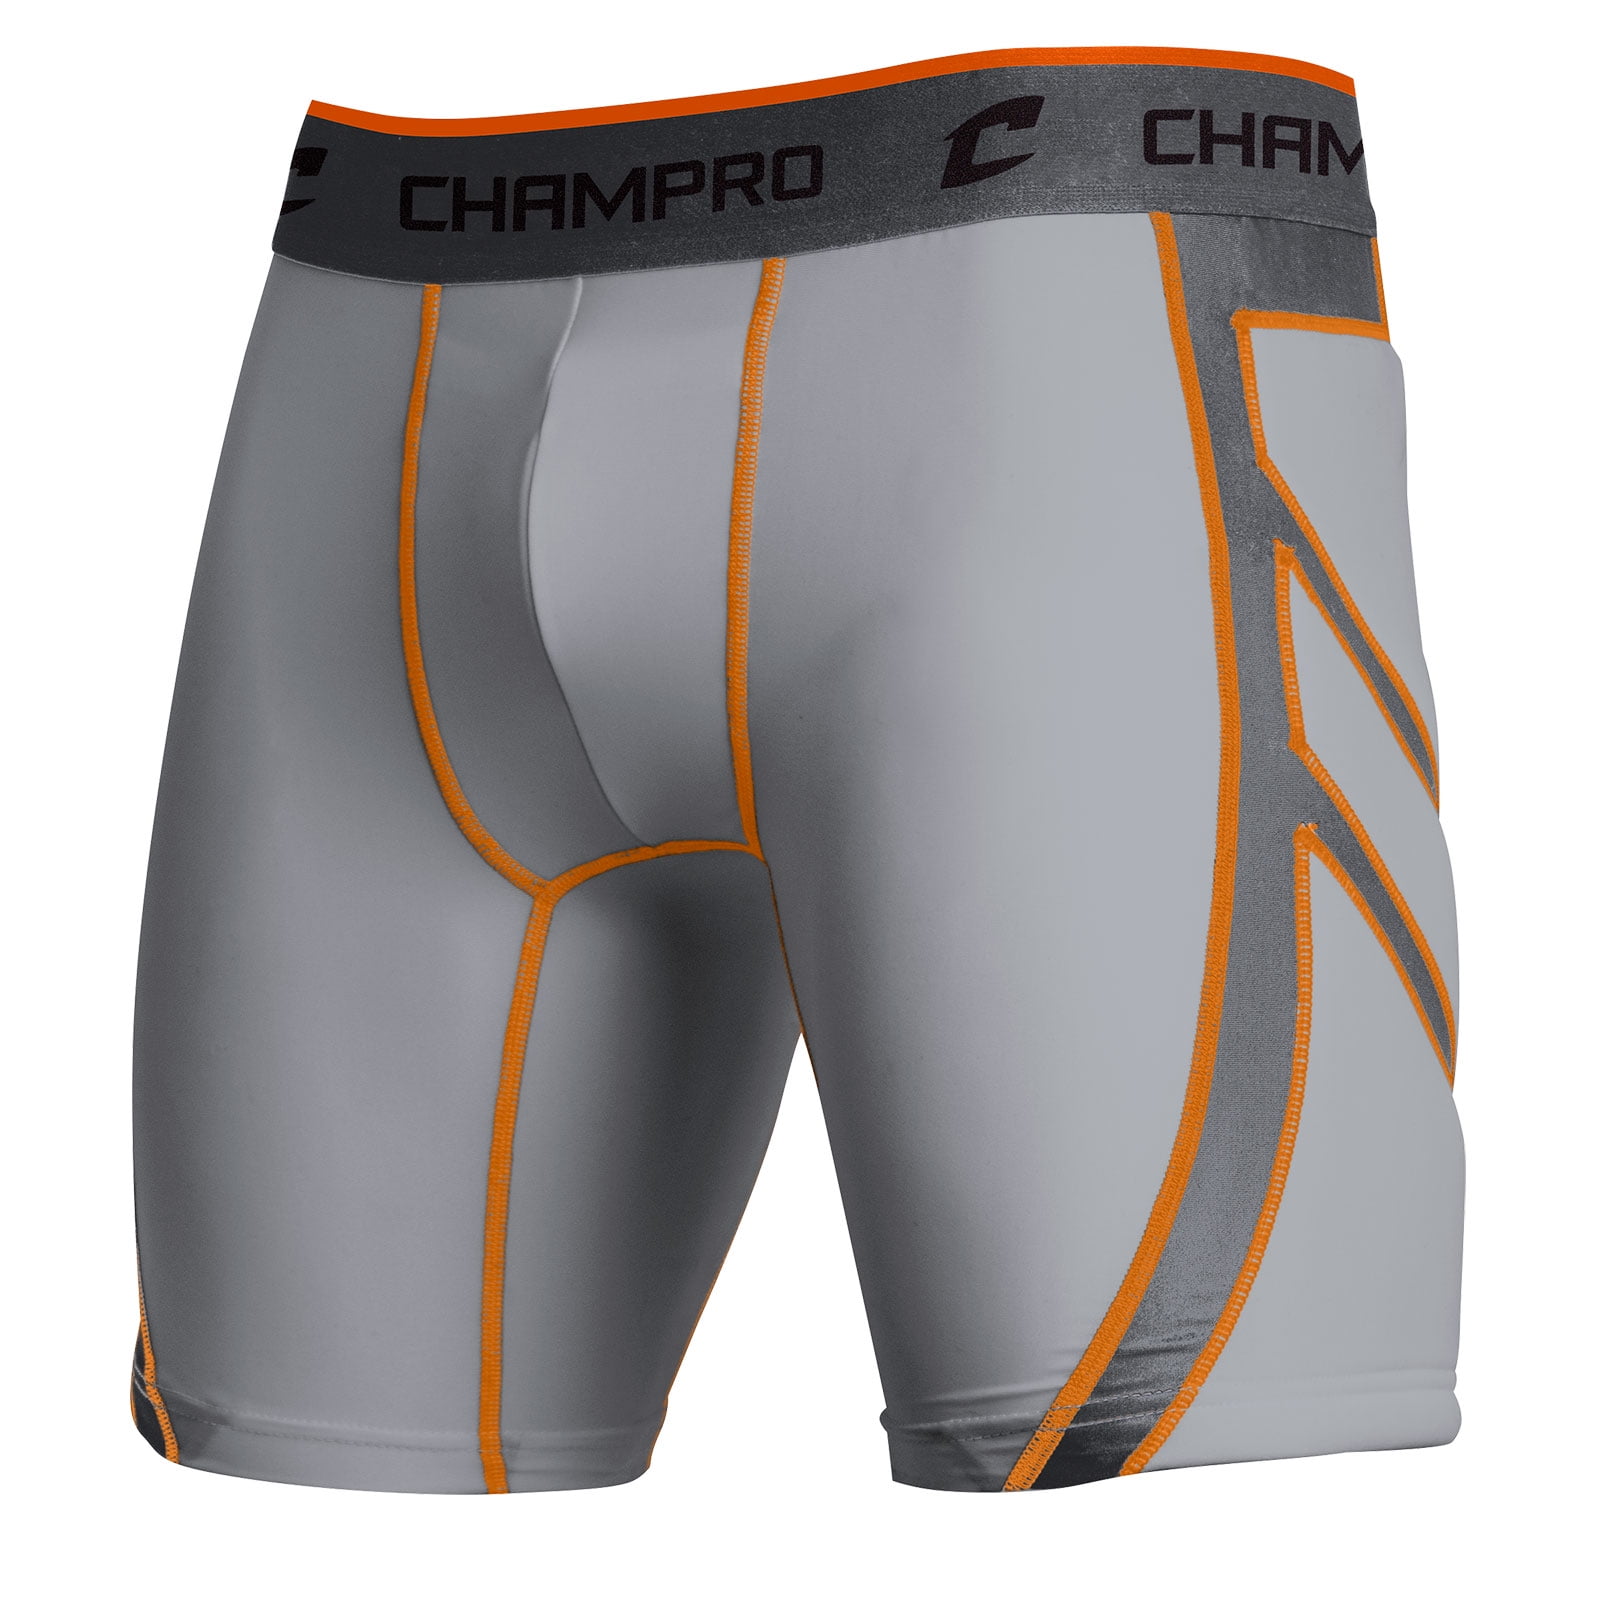 Champro Sports YOUTH Wind-Up Baseball Compression Sliding Shorts, Grey